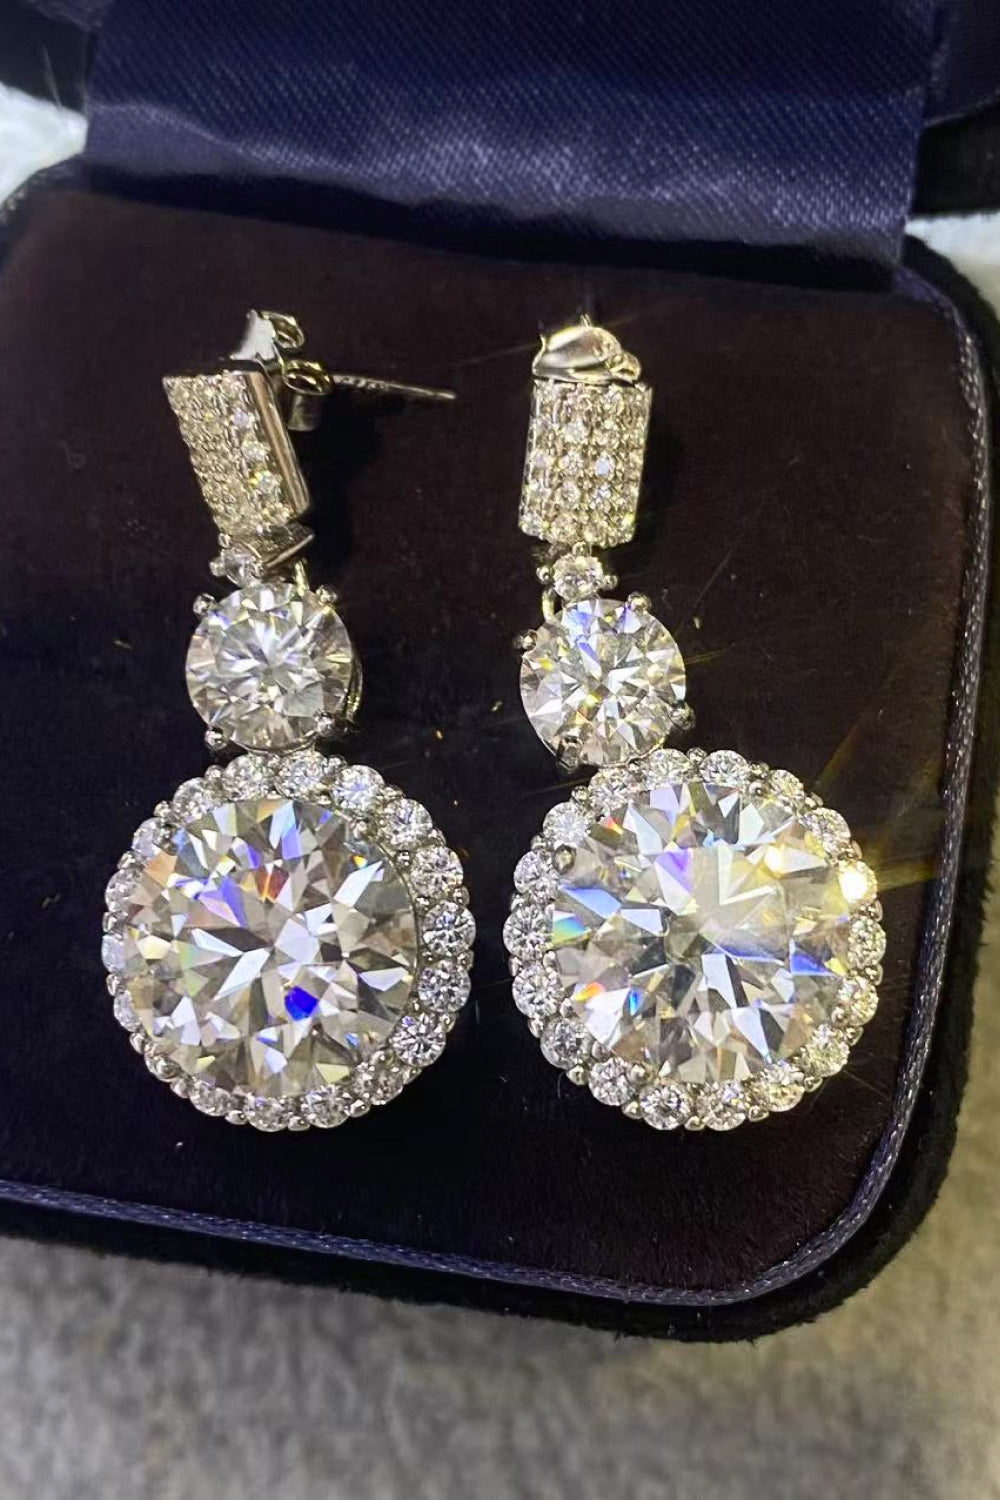 12 Carat Moissanite Platinum-Plated Drop Earrings - Tophatter Shopping Deals